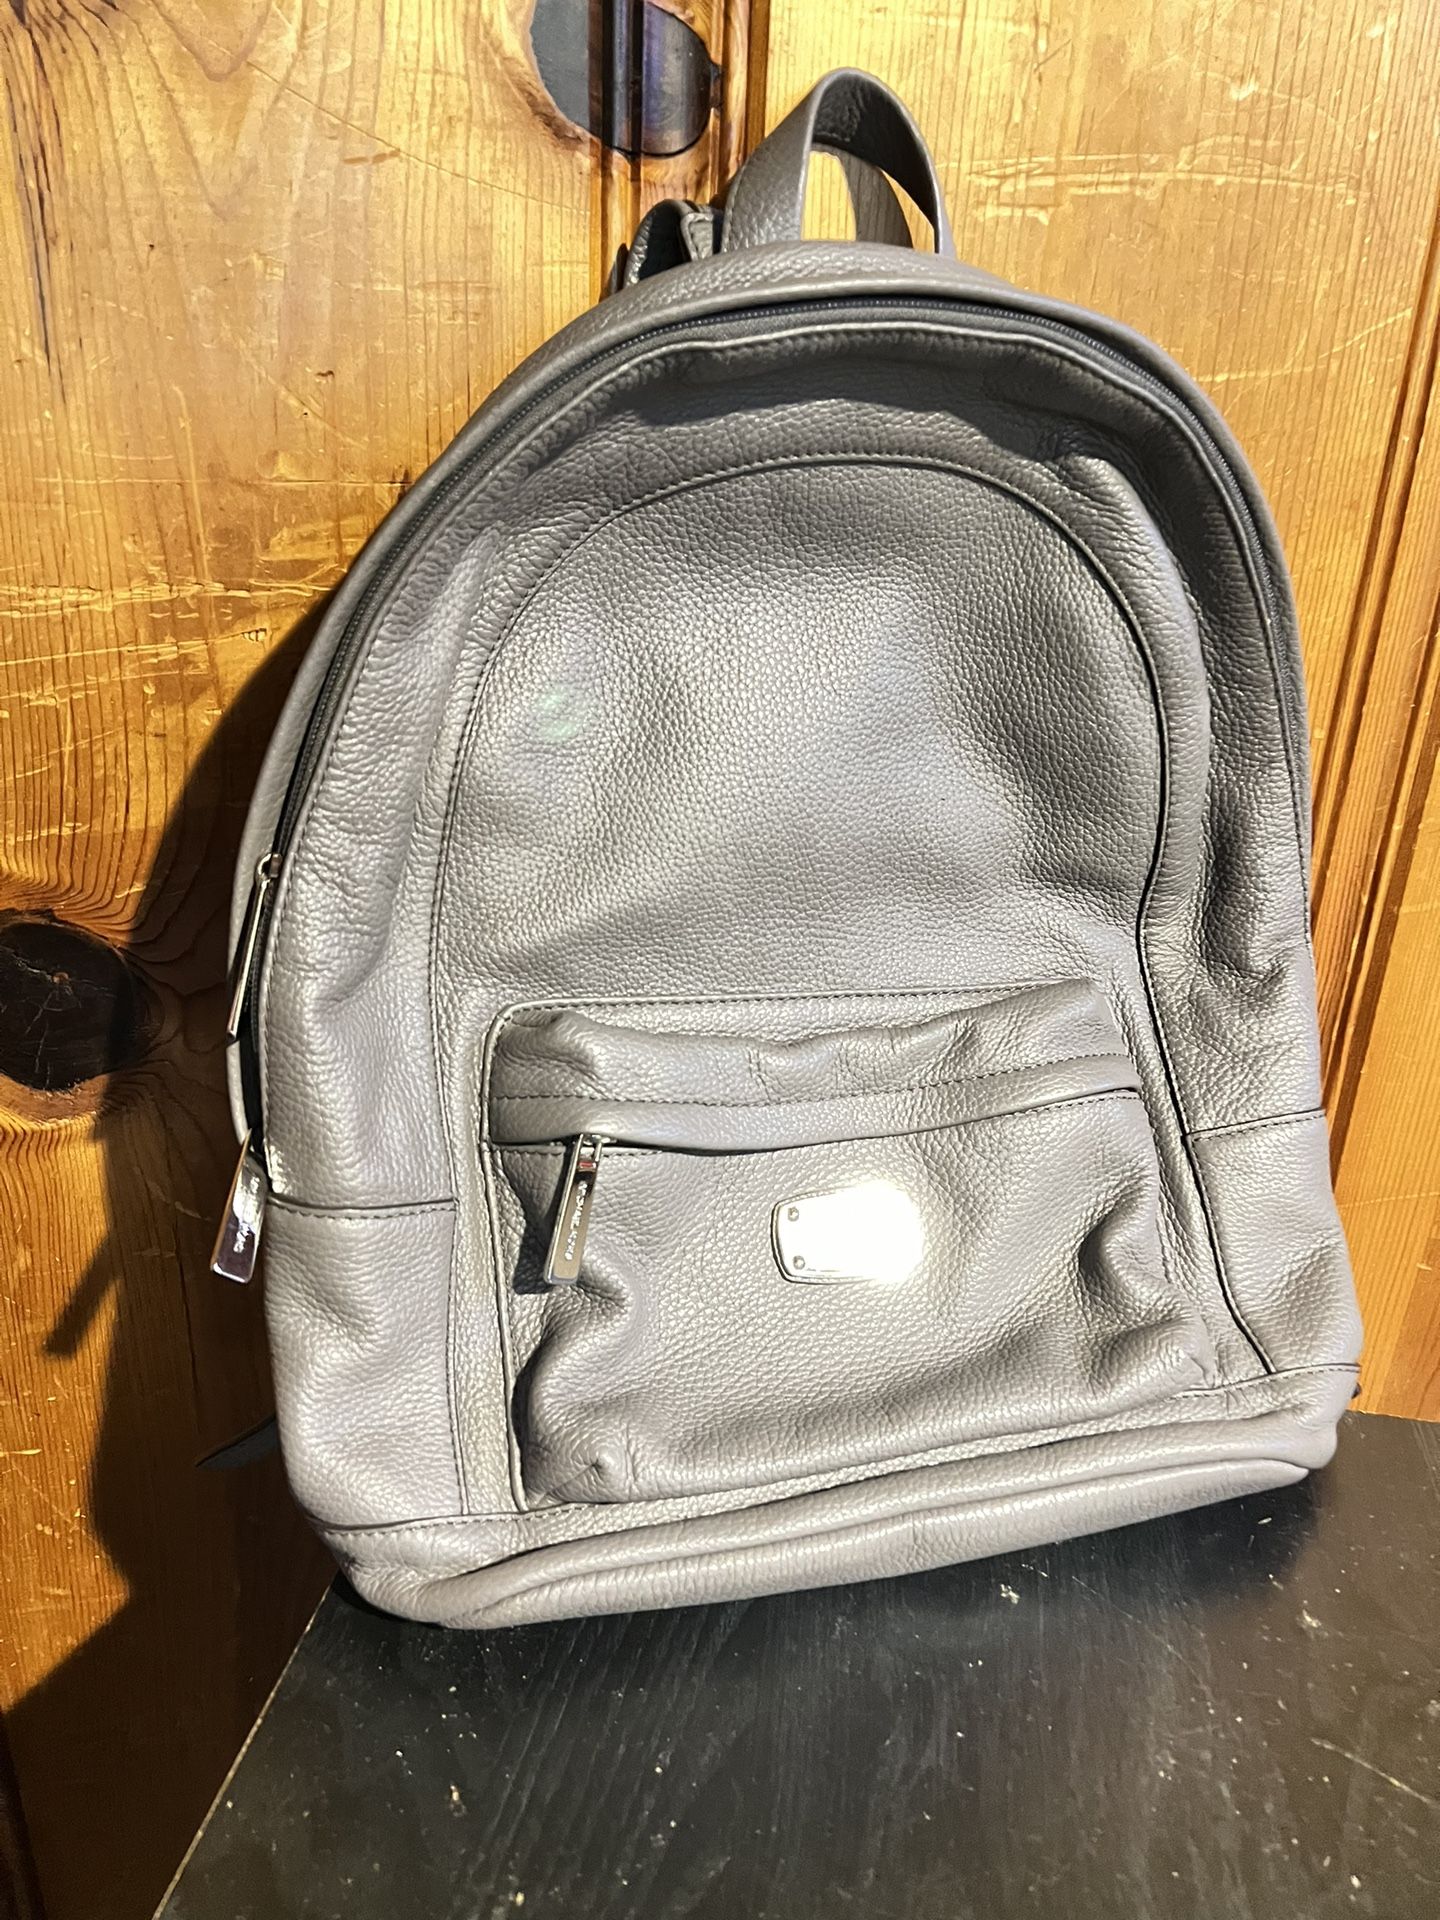 Michael Kors Gray Backpack